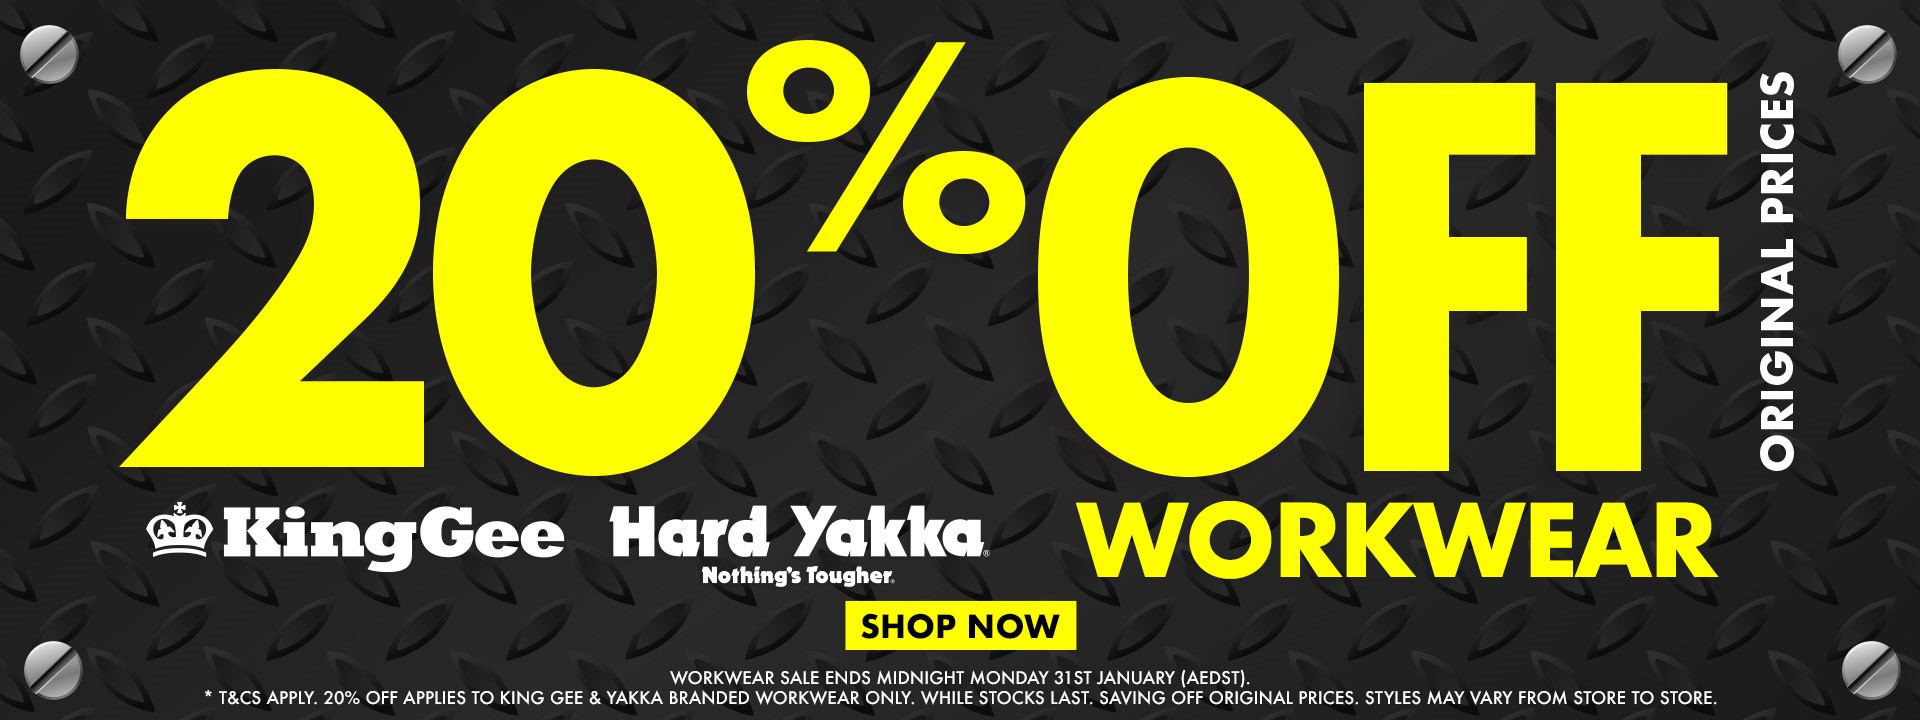 Lowes 20% OFF King Gee & Hard Yakka workwear. Save on clothing & footwear